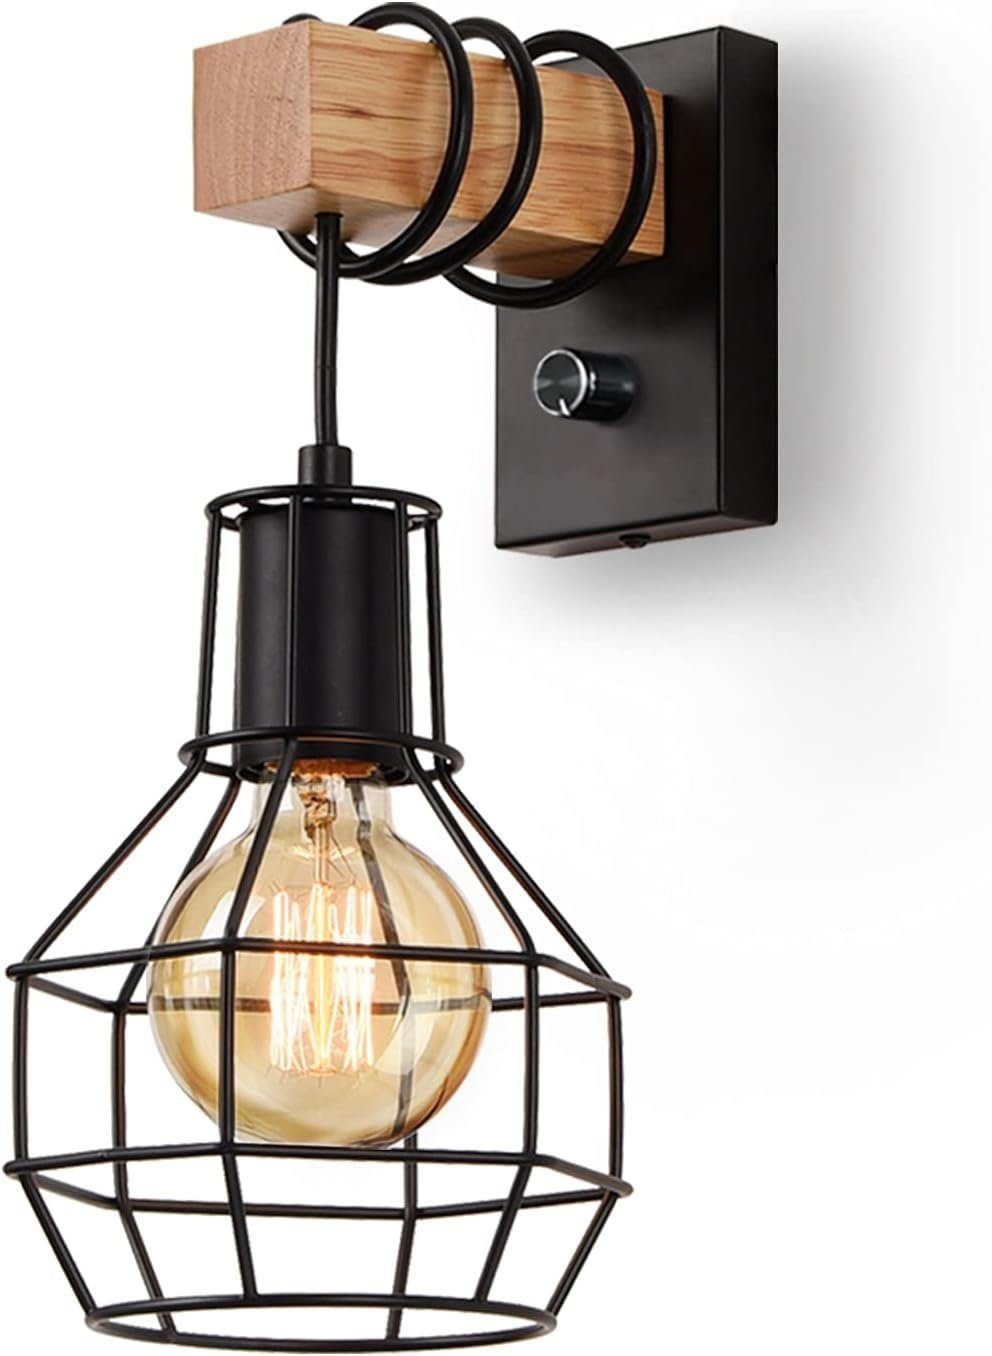 DOPWii Wandleuchte Wandlampe Dimmbar,Retro Lampe aus Metall und Holz E27 mit Schalter